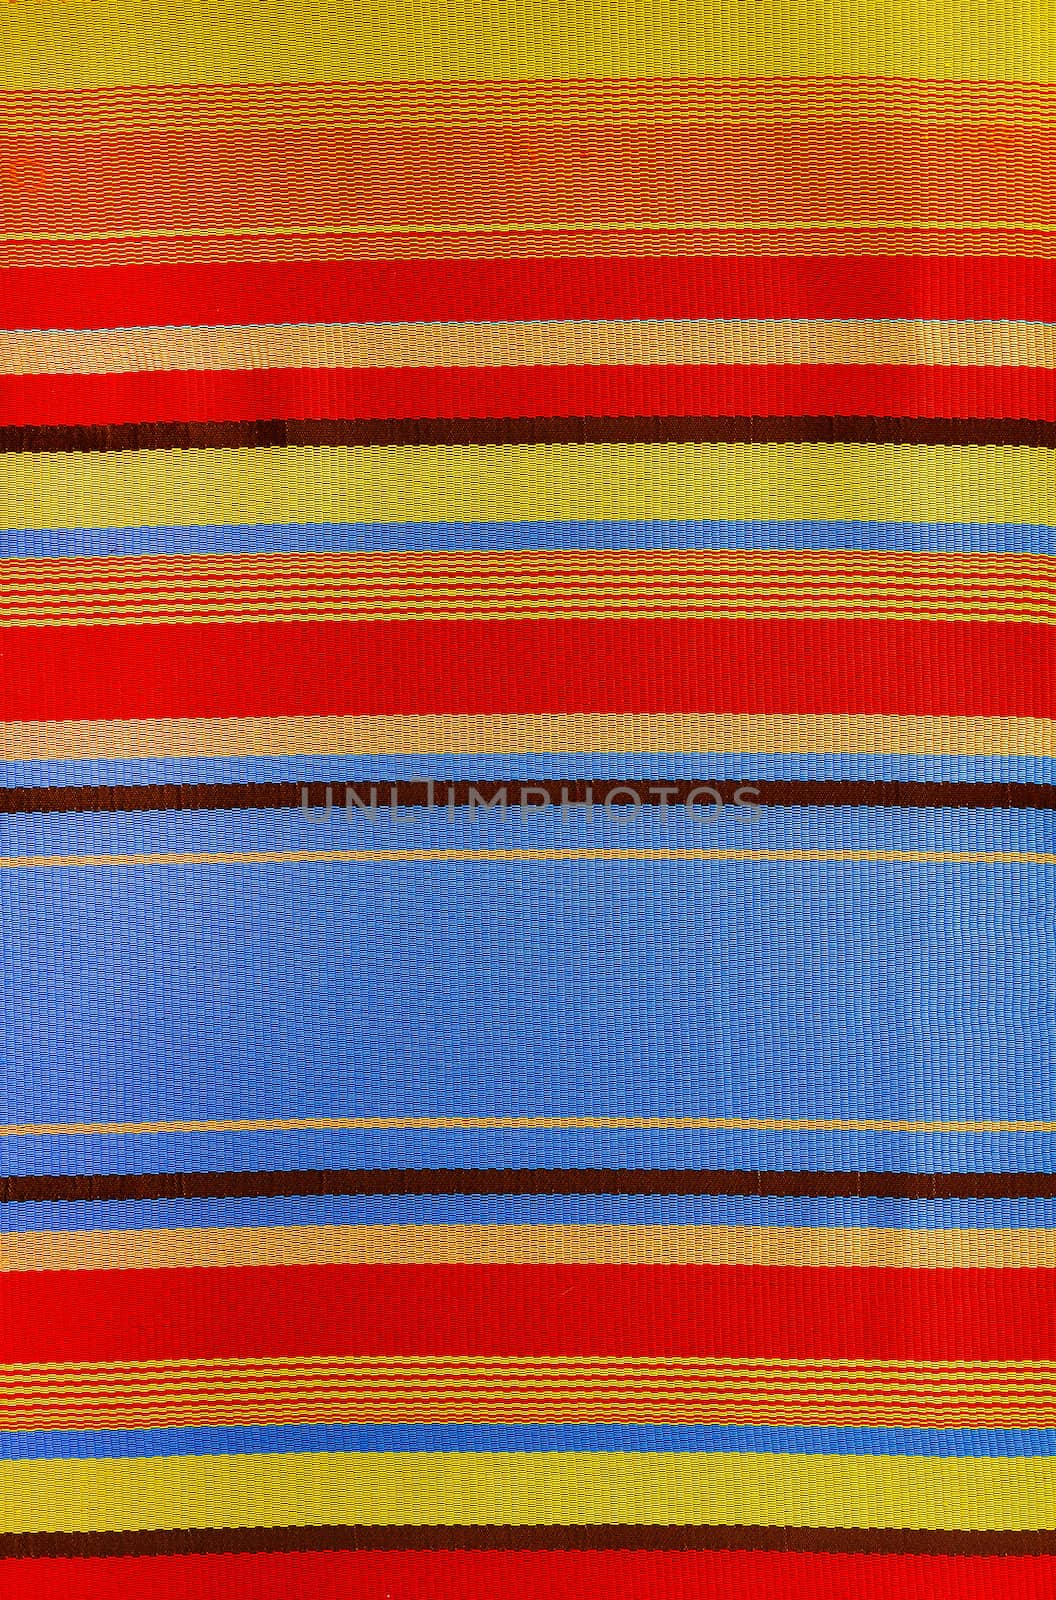 High resolution striped canvas fabric